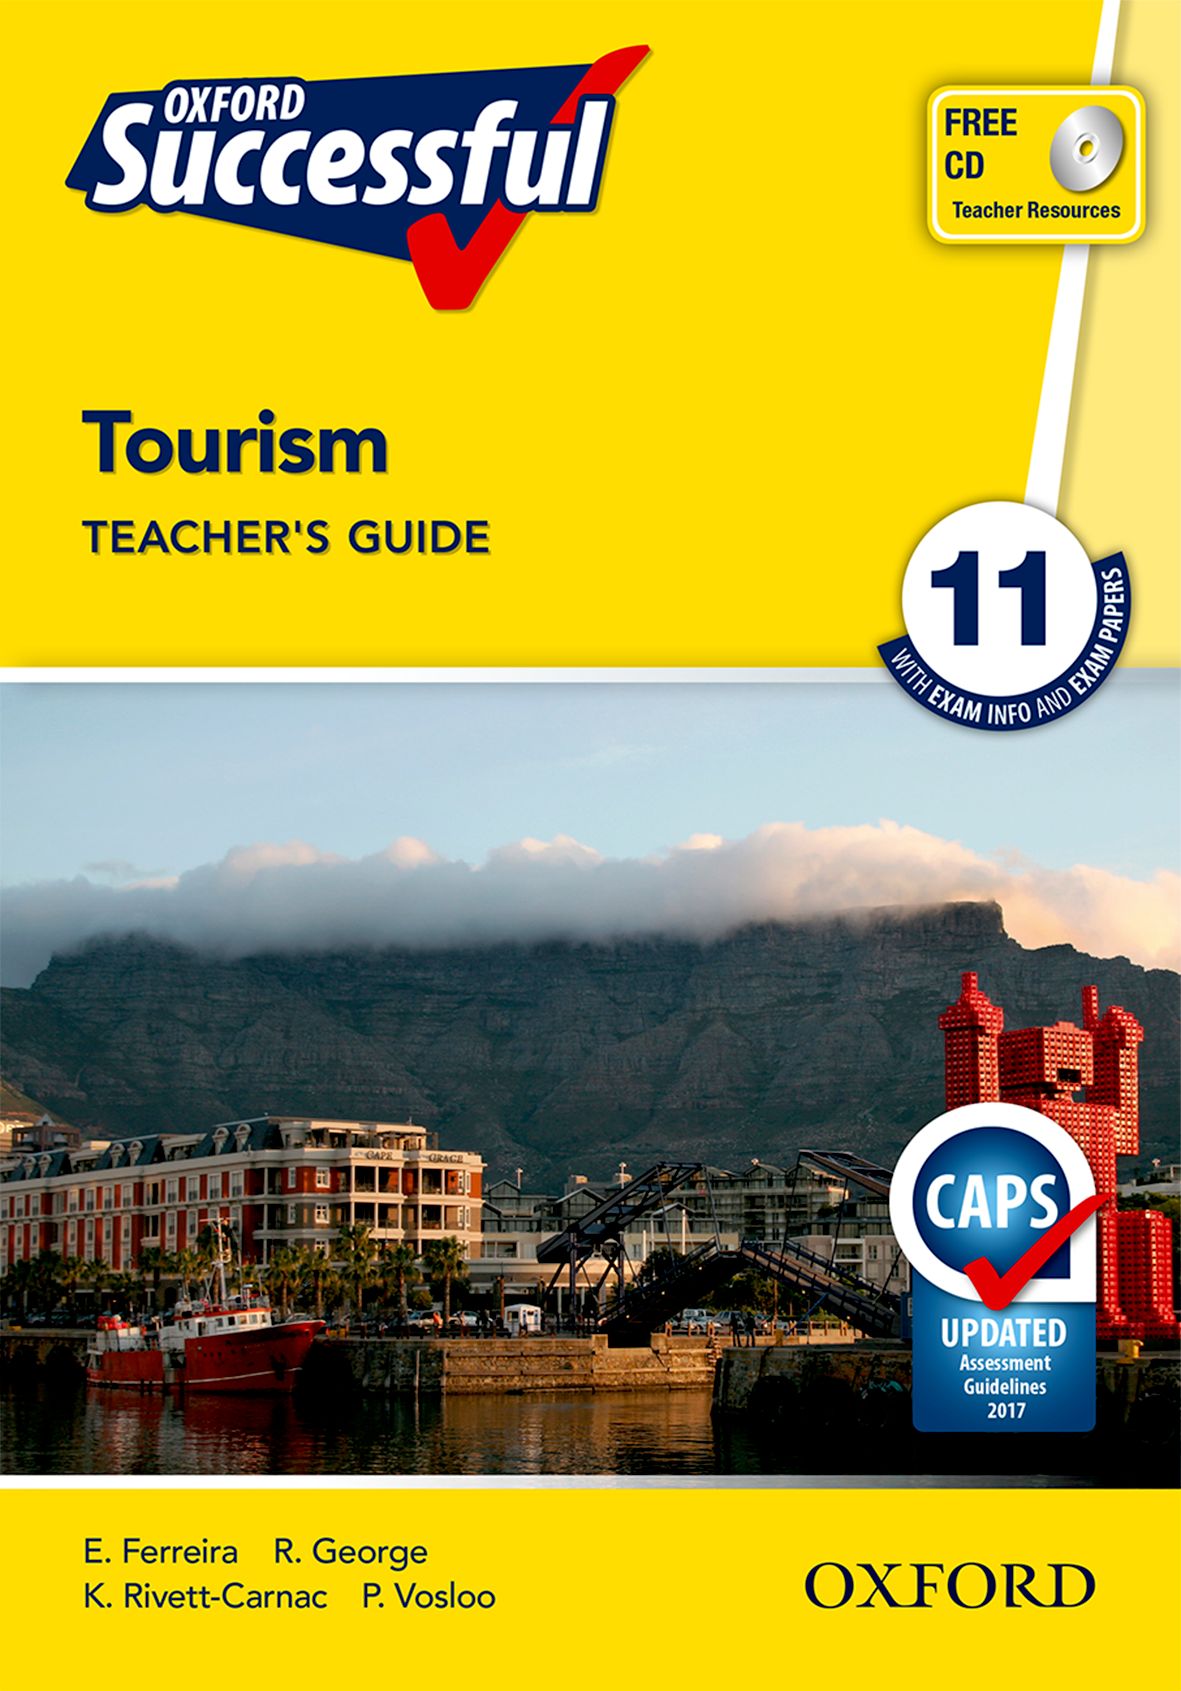 tourism 3 teacher's book pdf